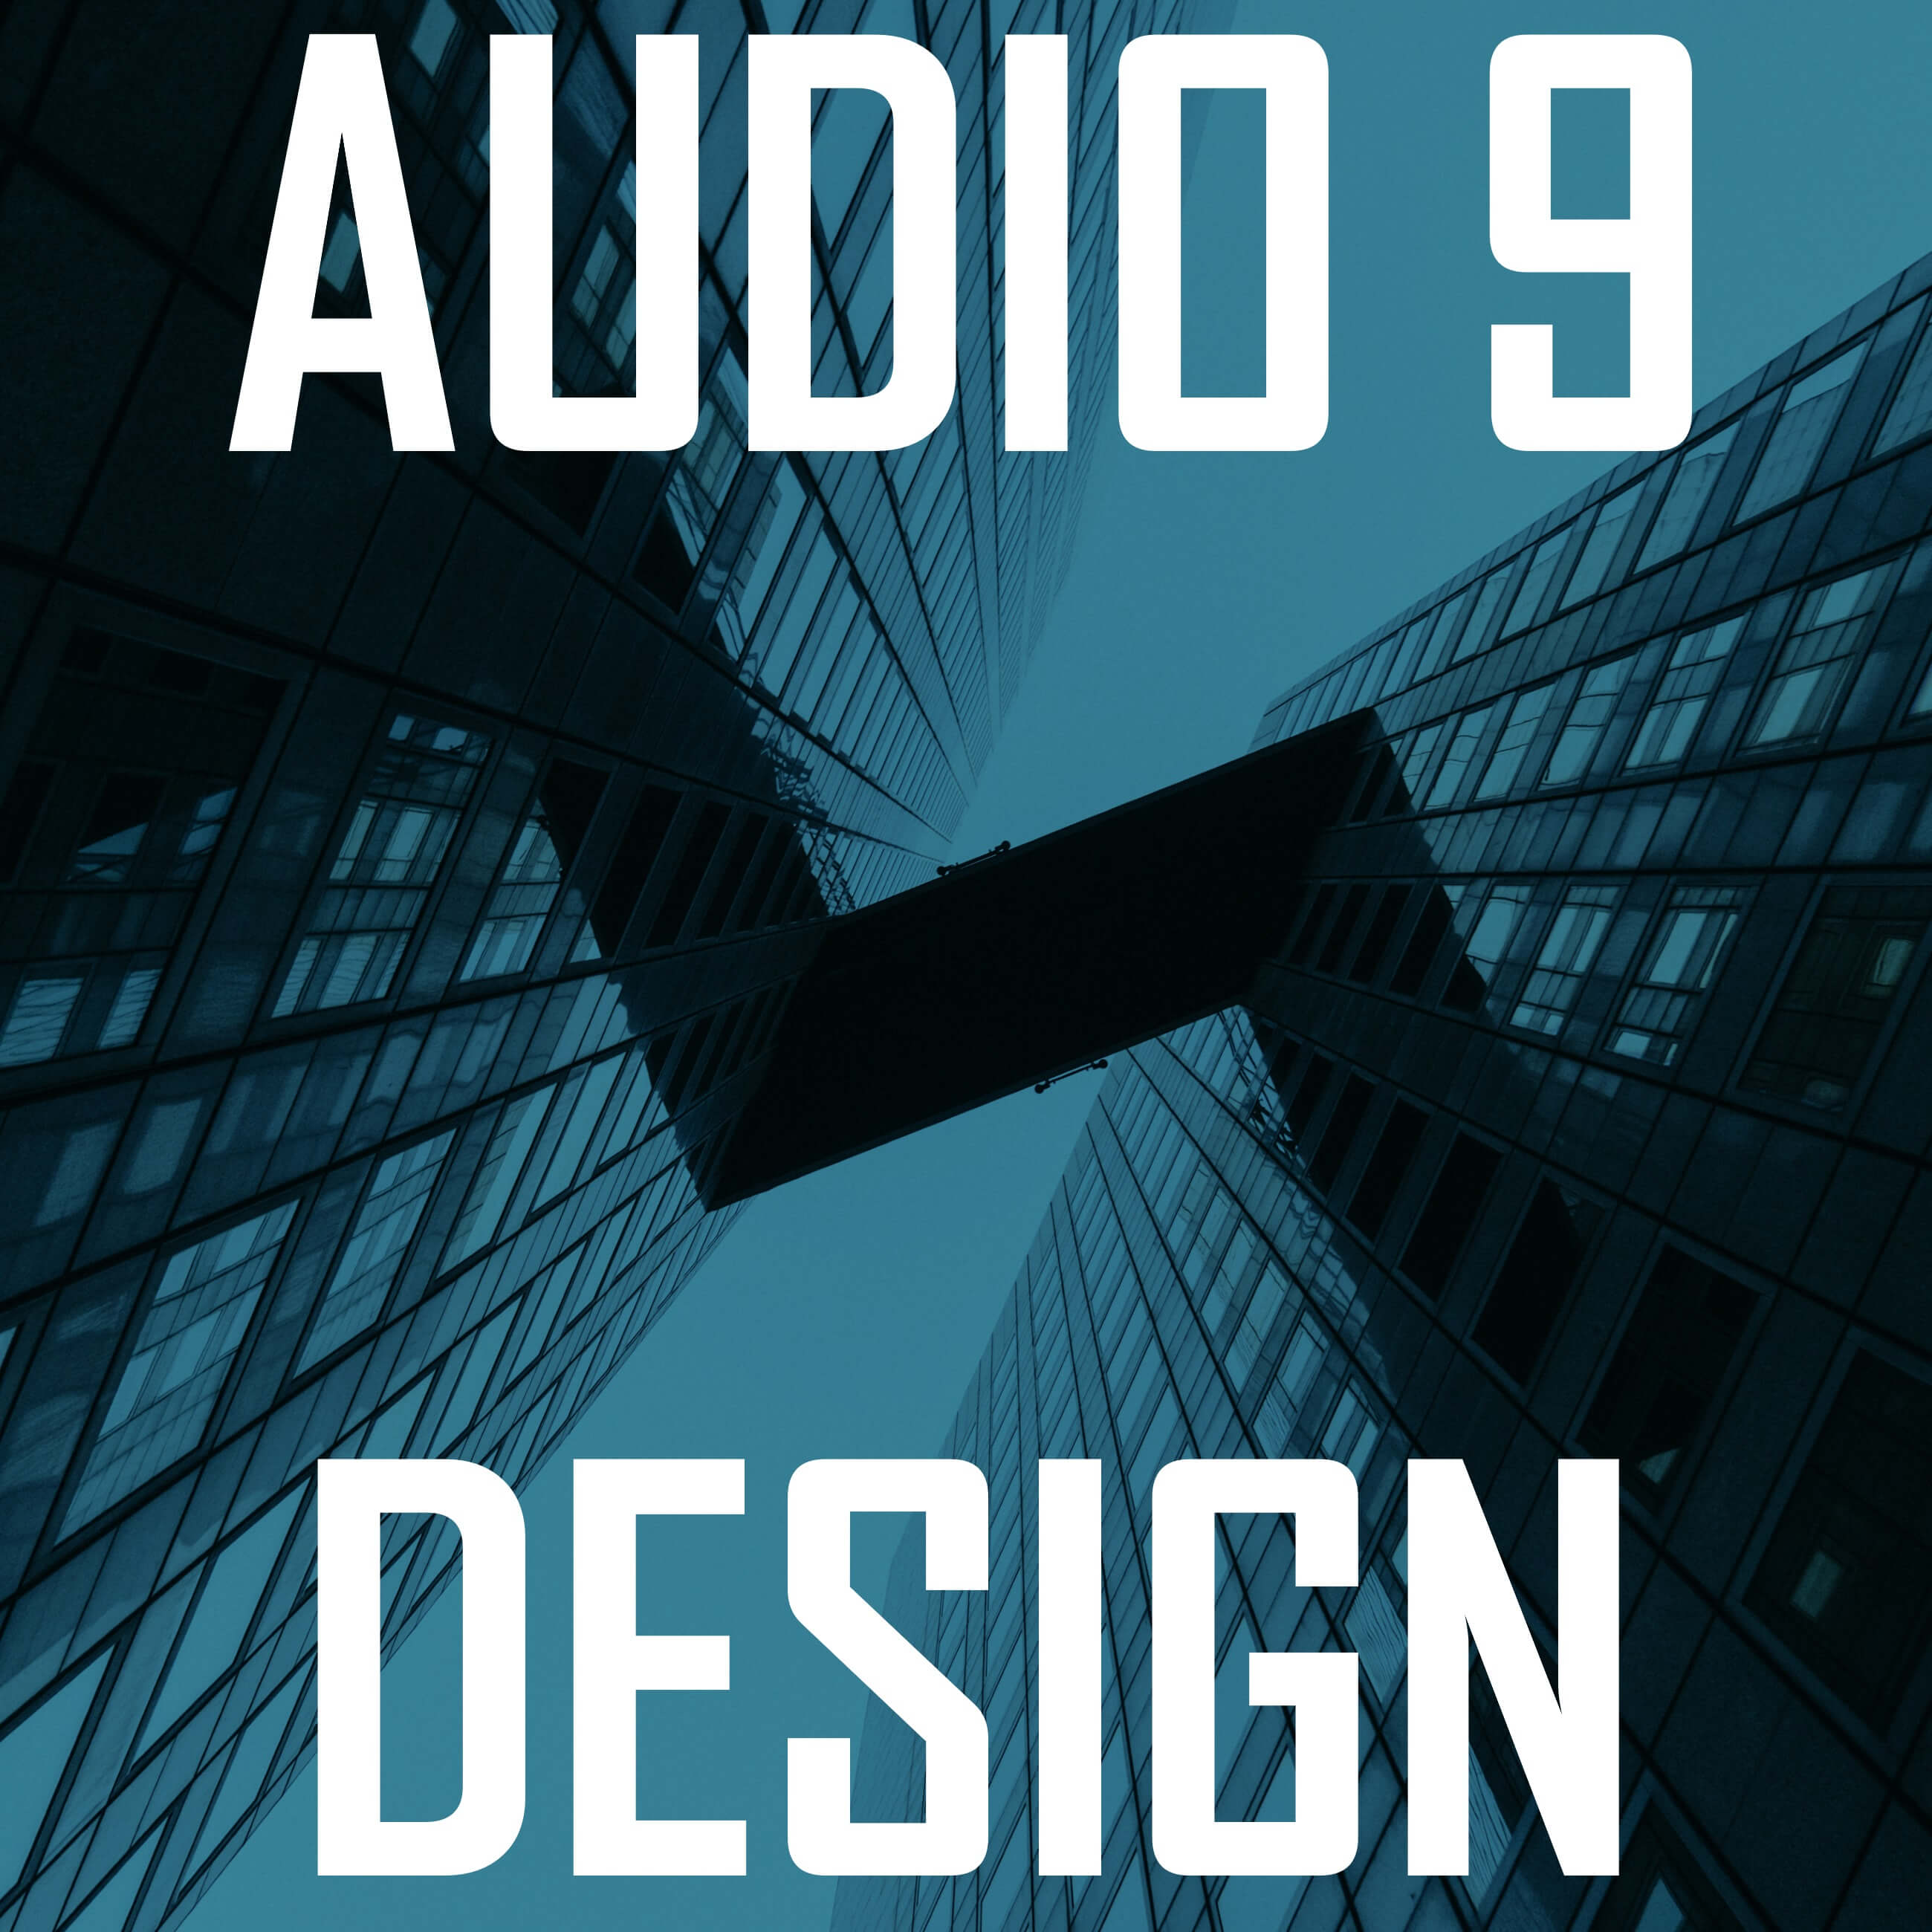 Jason Talks Design - Episode 18 - Design Inspiration